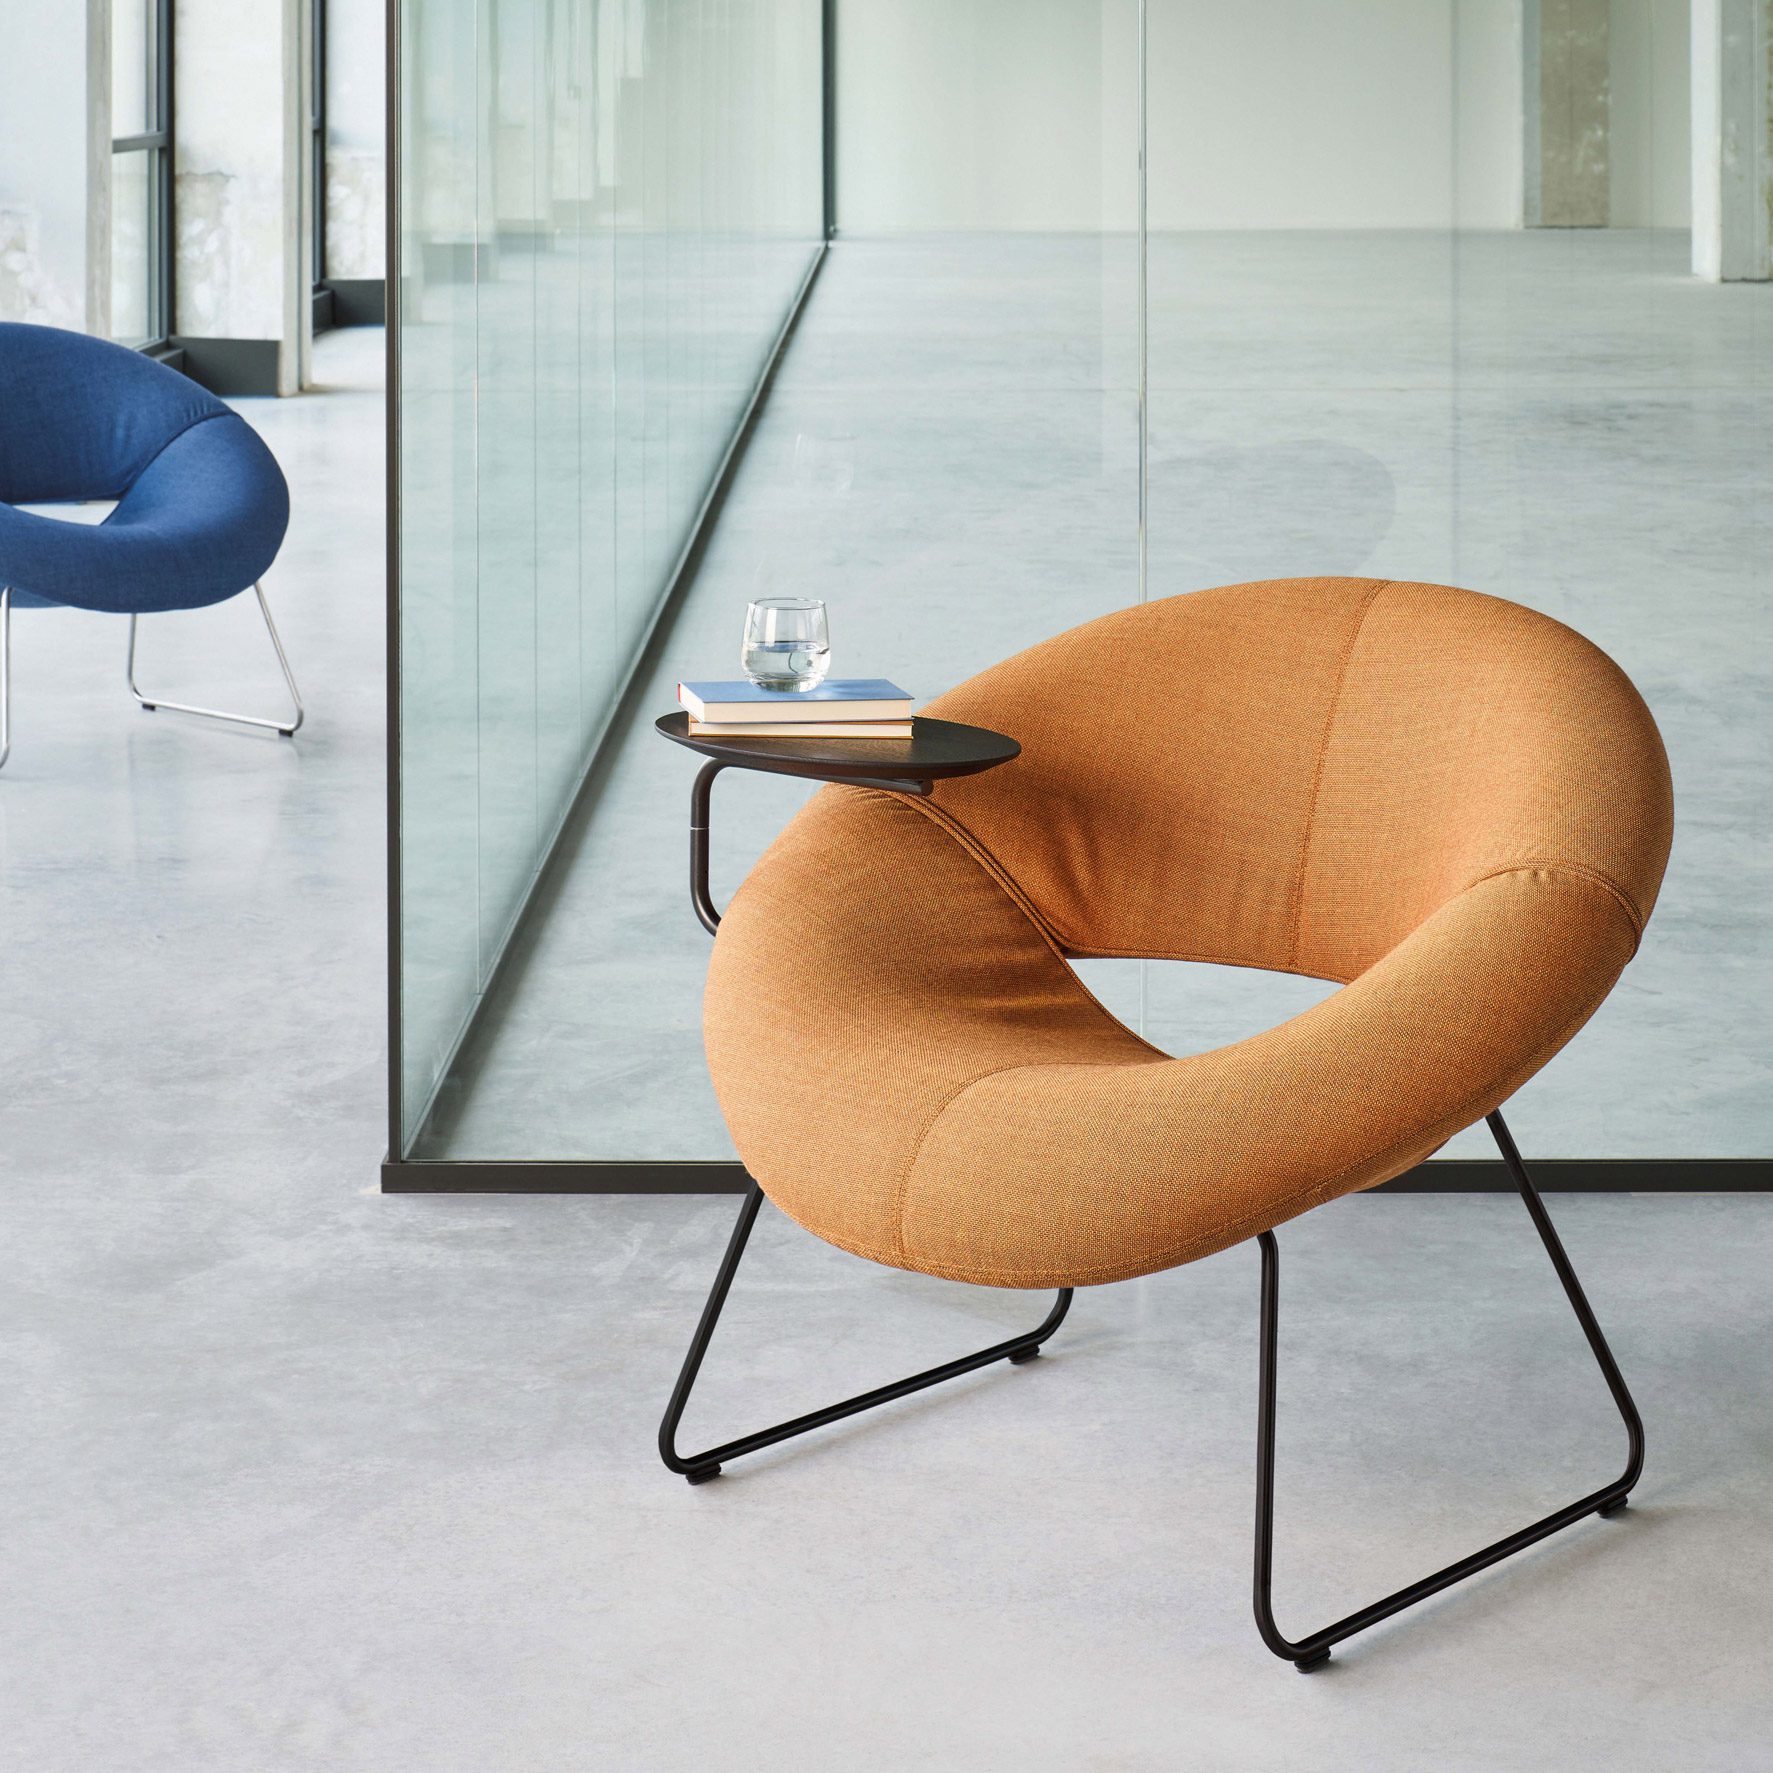 LXR18 armchair for Martin Ballendat by Leolux LX